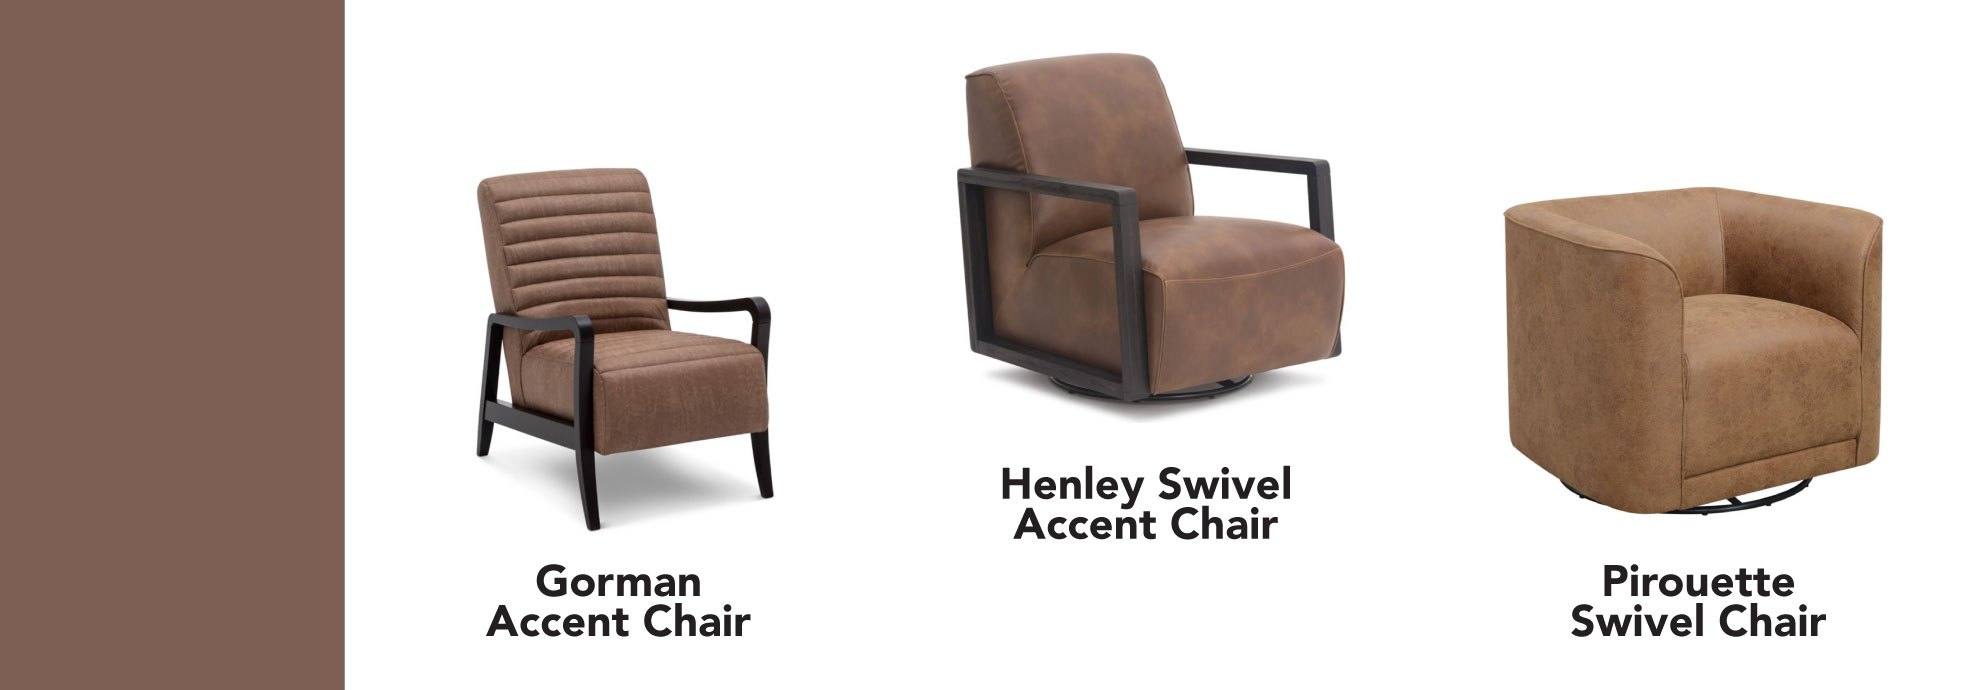 Gorman Accent Chair. Henley Swivel Chair. Pirouette Swivel Chair